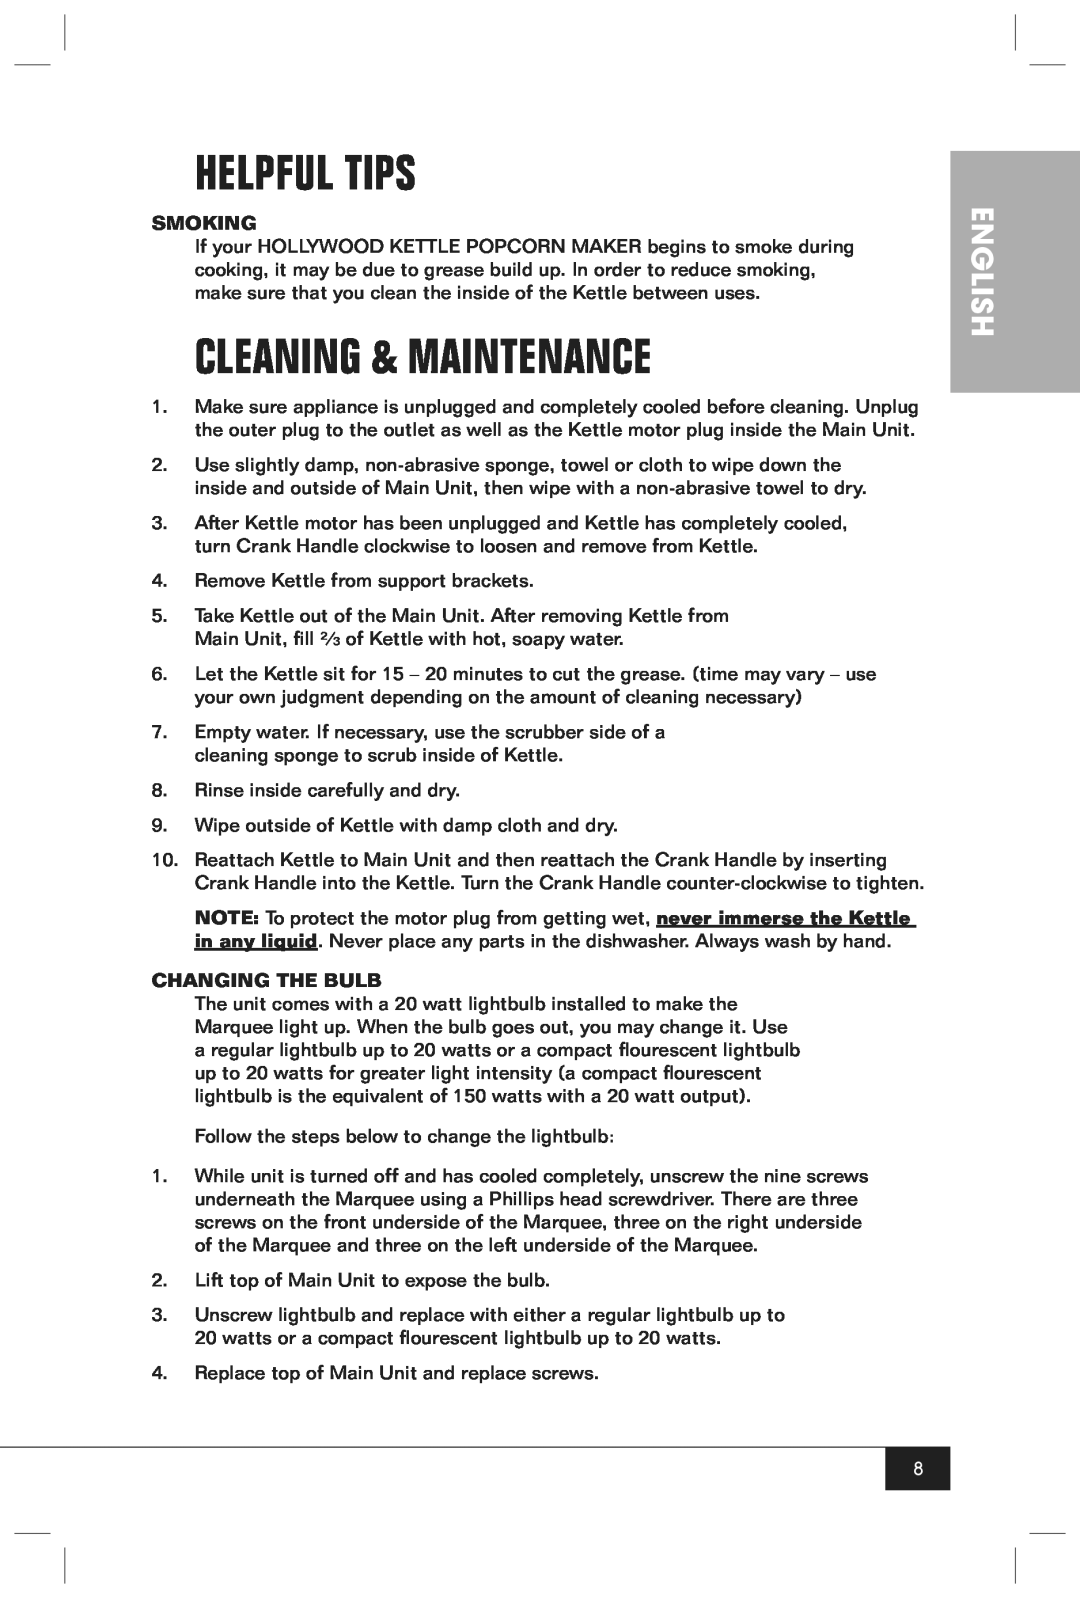 Nostalgia Electrics HKP200 manual Helpful Tips, Cleaning & Maintenance, English, Smoking, Changing The Bulb 